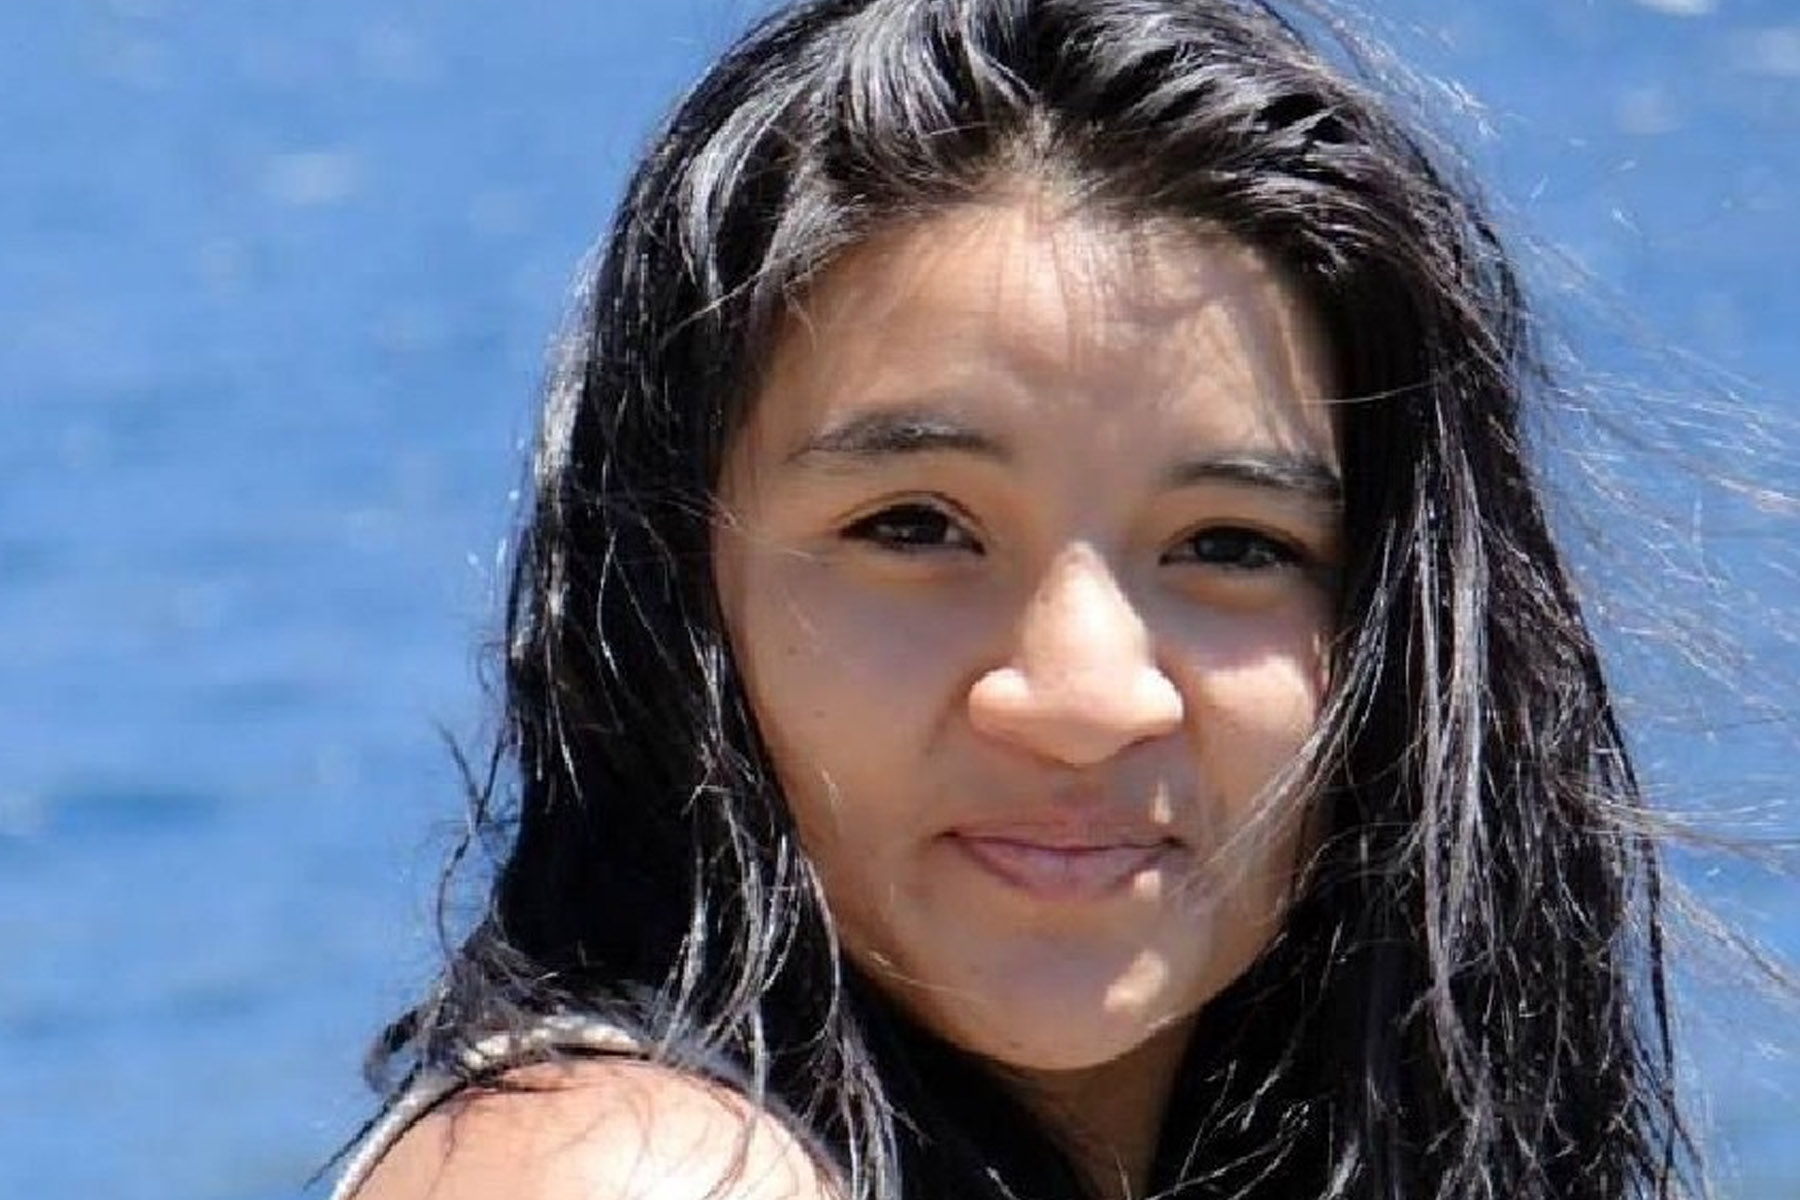 Apareció muerta la mujer desaparecida en Bariloche